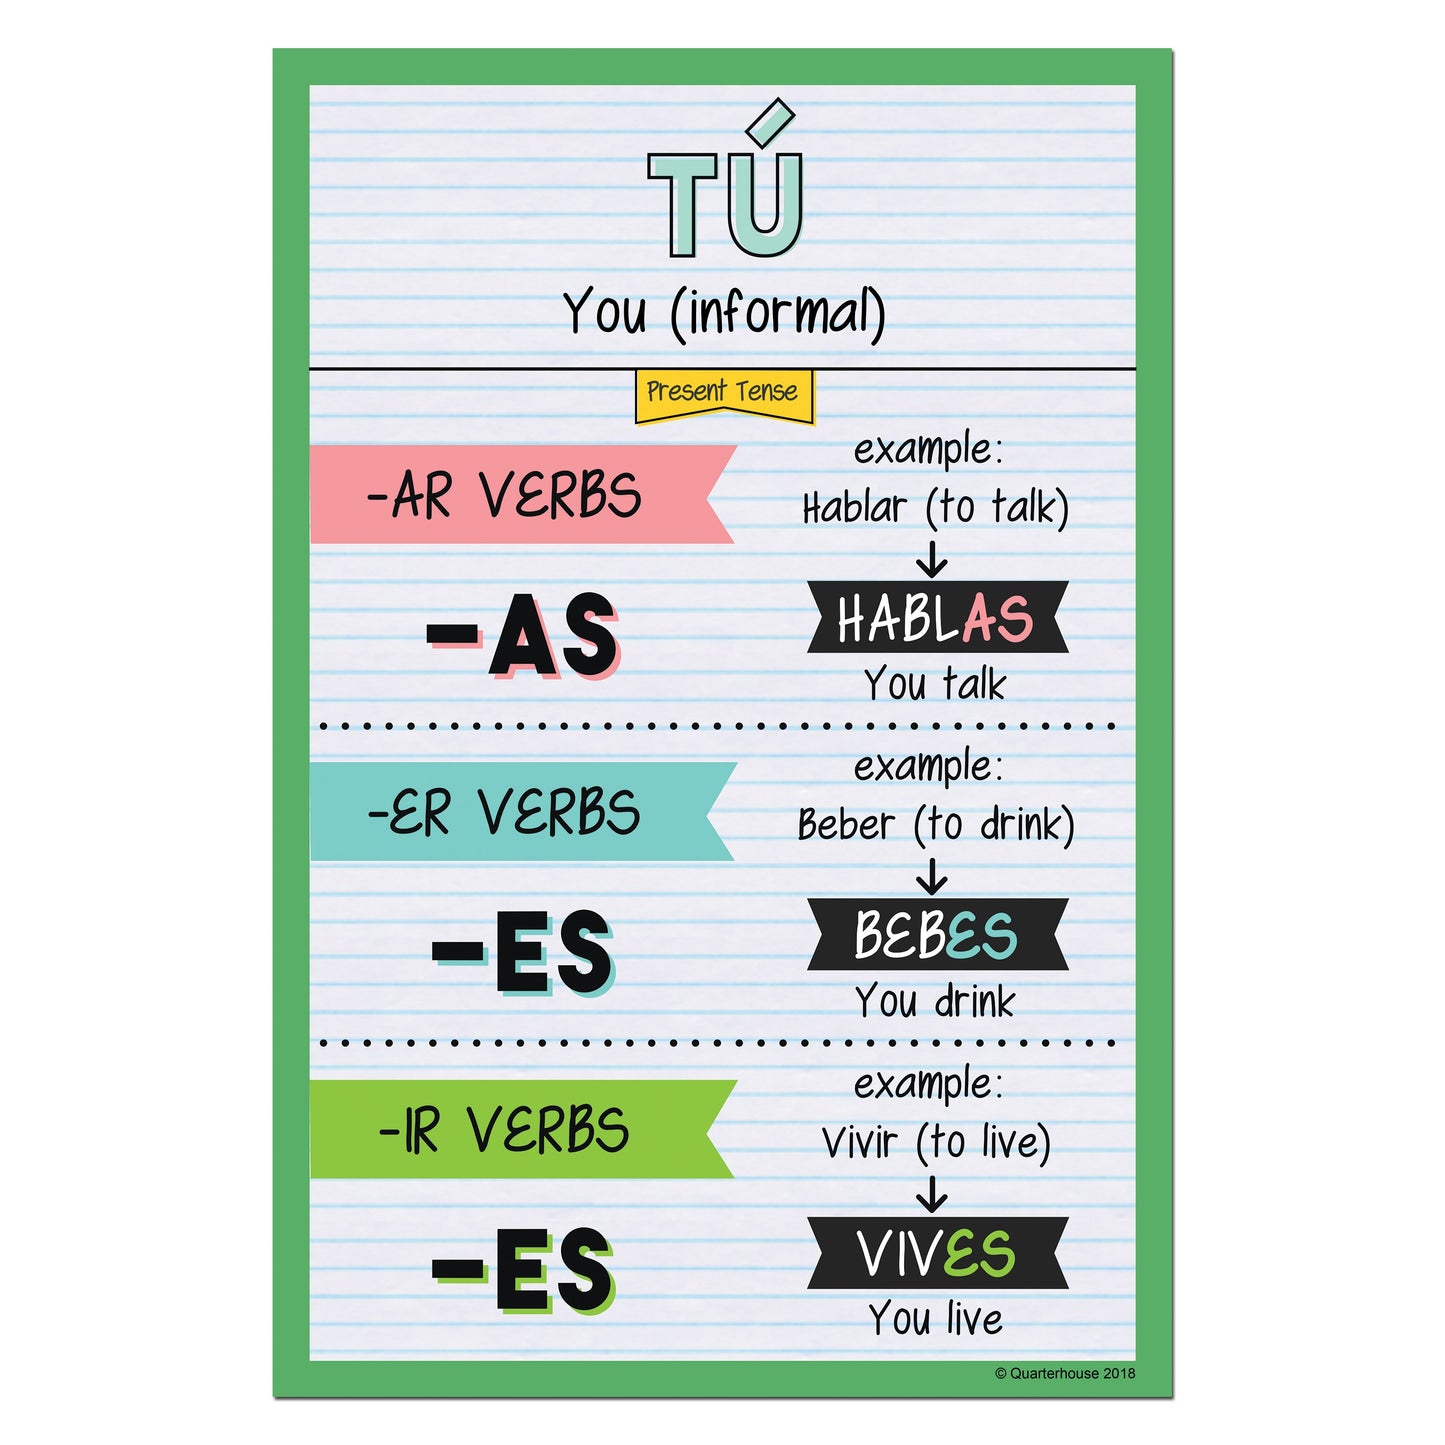 Quarterhouse Tú - Present Tense Spanish Verb Conjugation Poster, Spanish and ESL Classroom Materials for Teachers